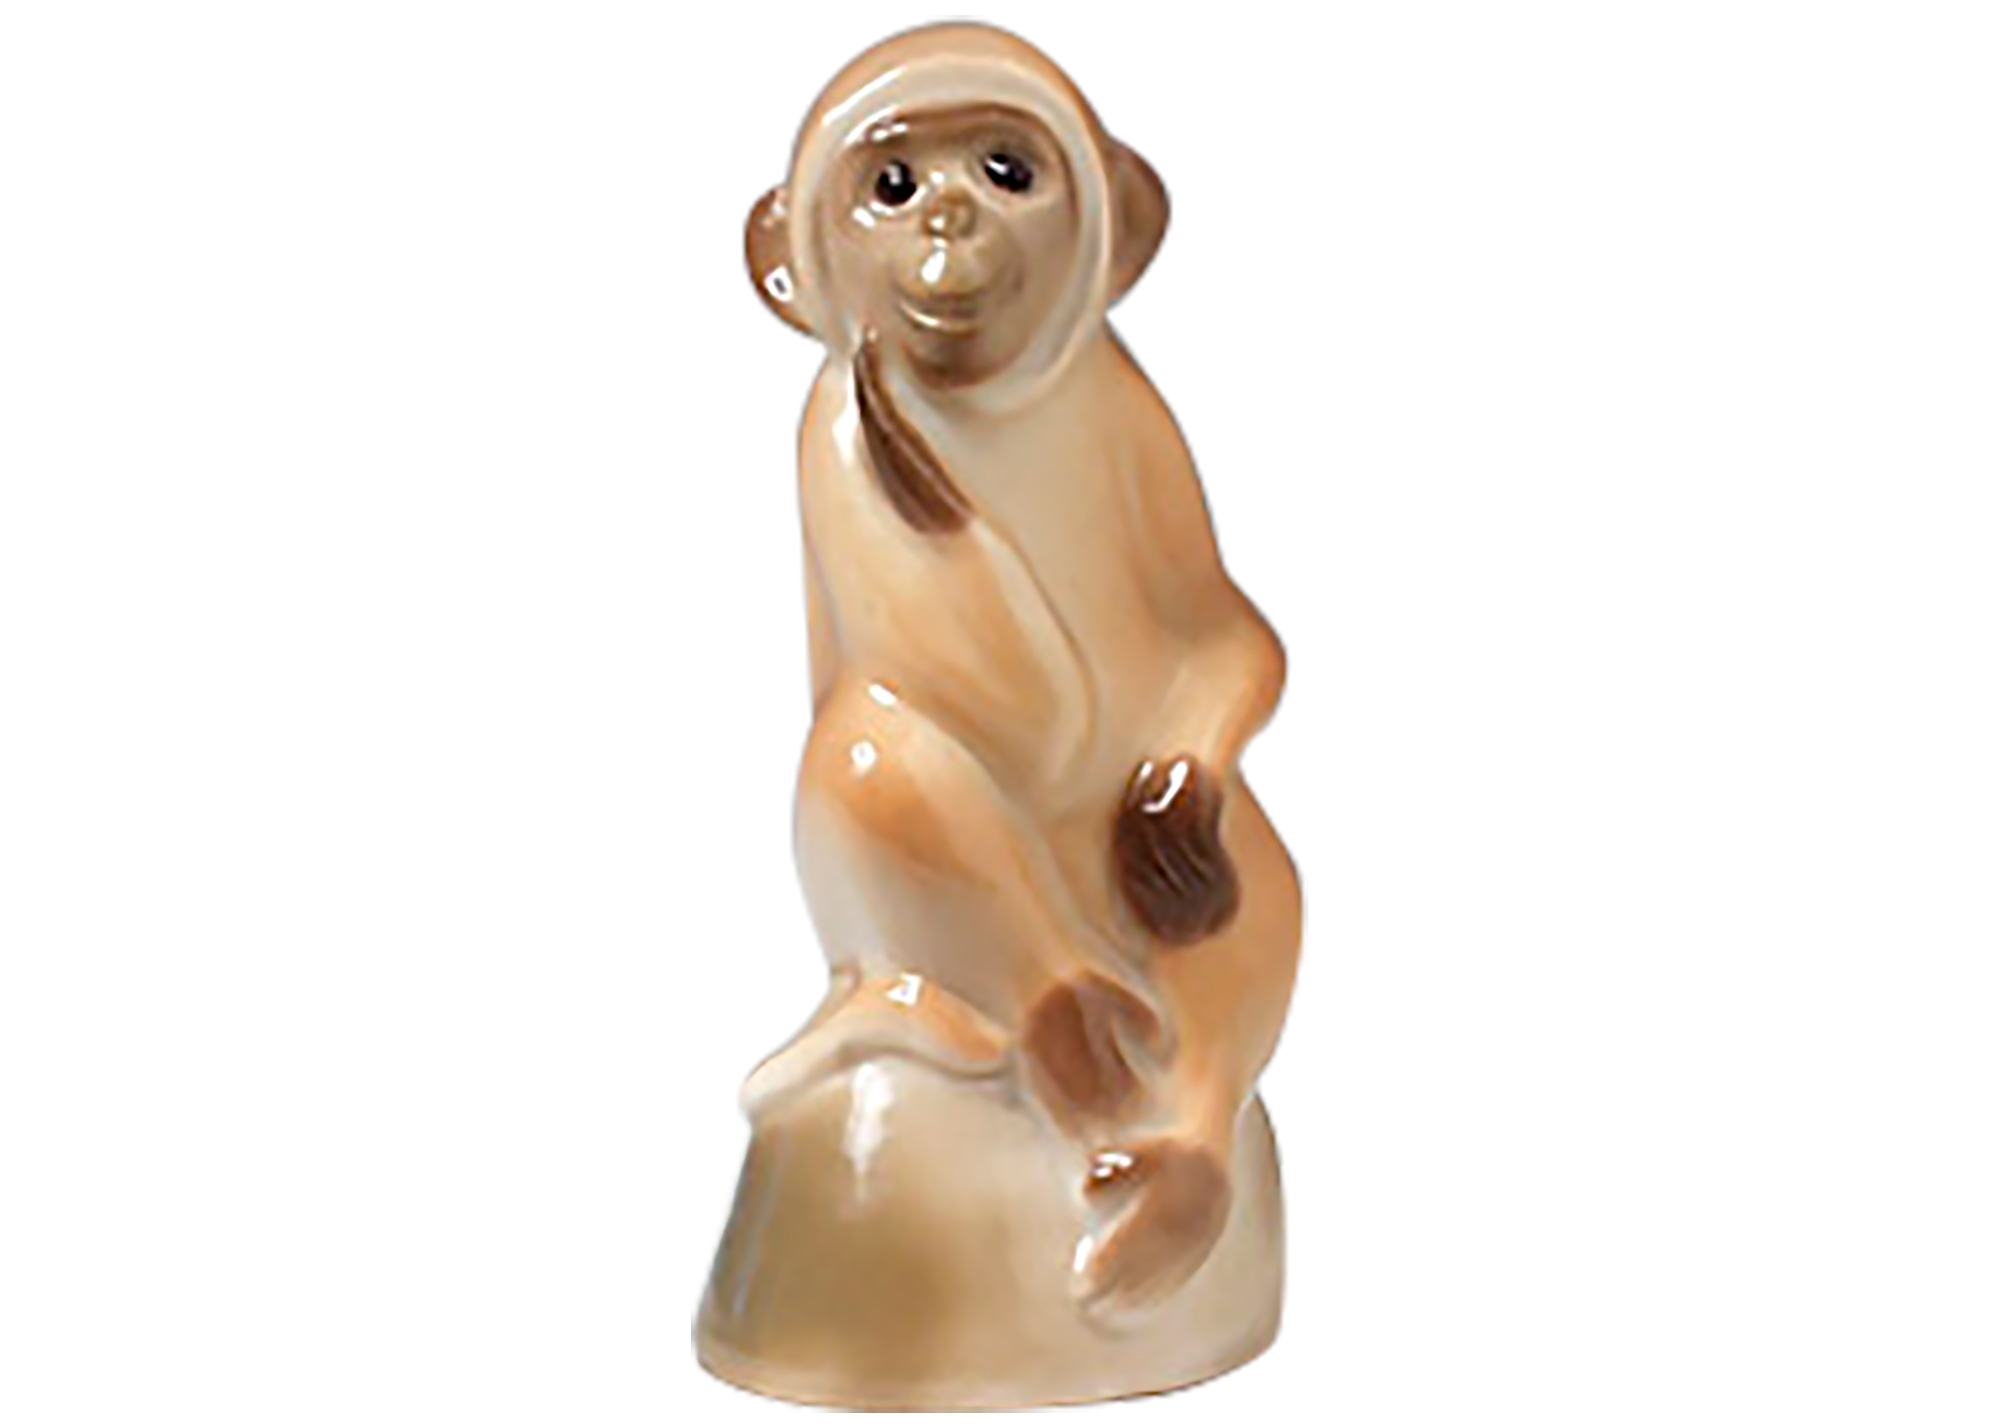 Buy Monkey on Stand Figurine at GoldenCockerel.com